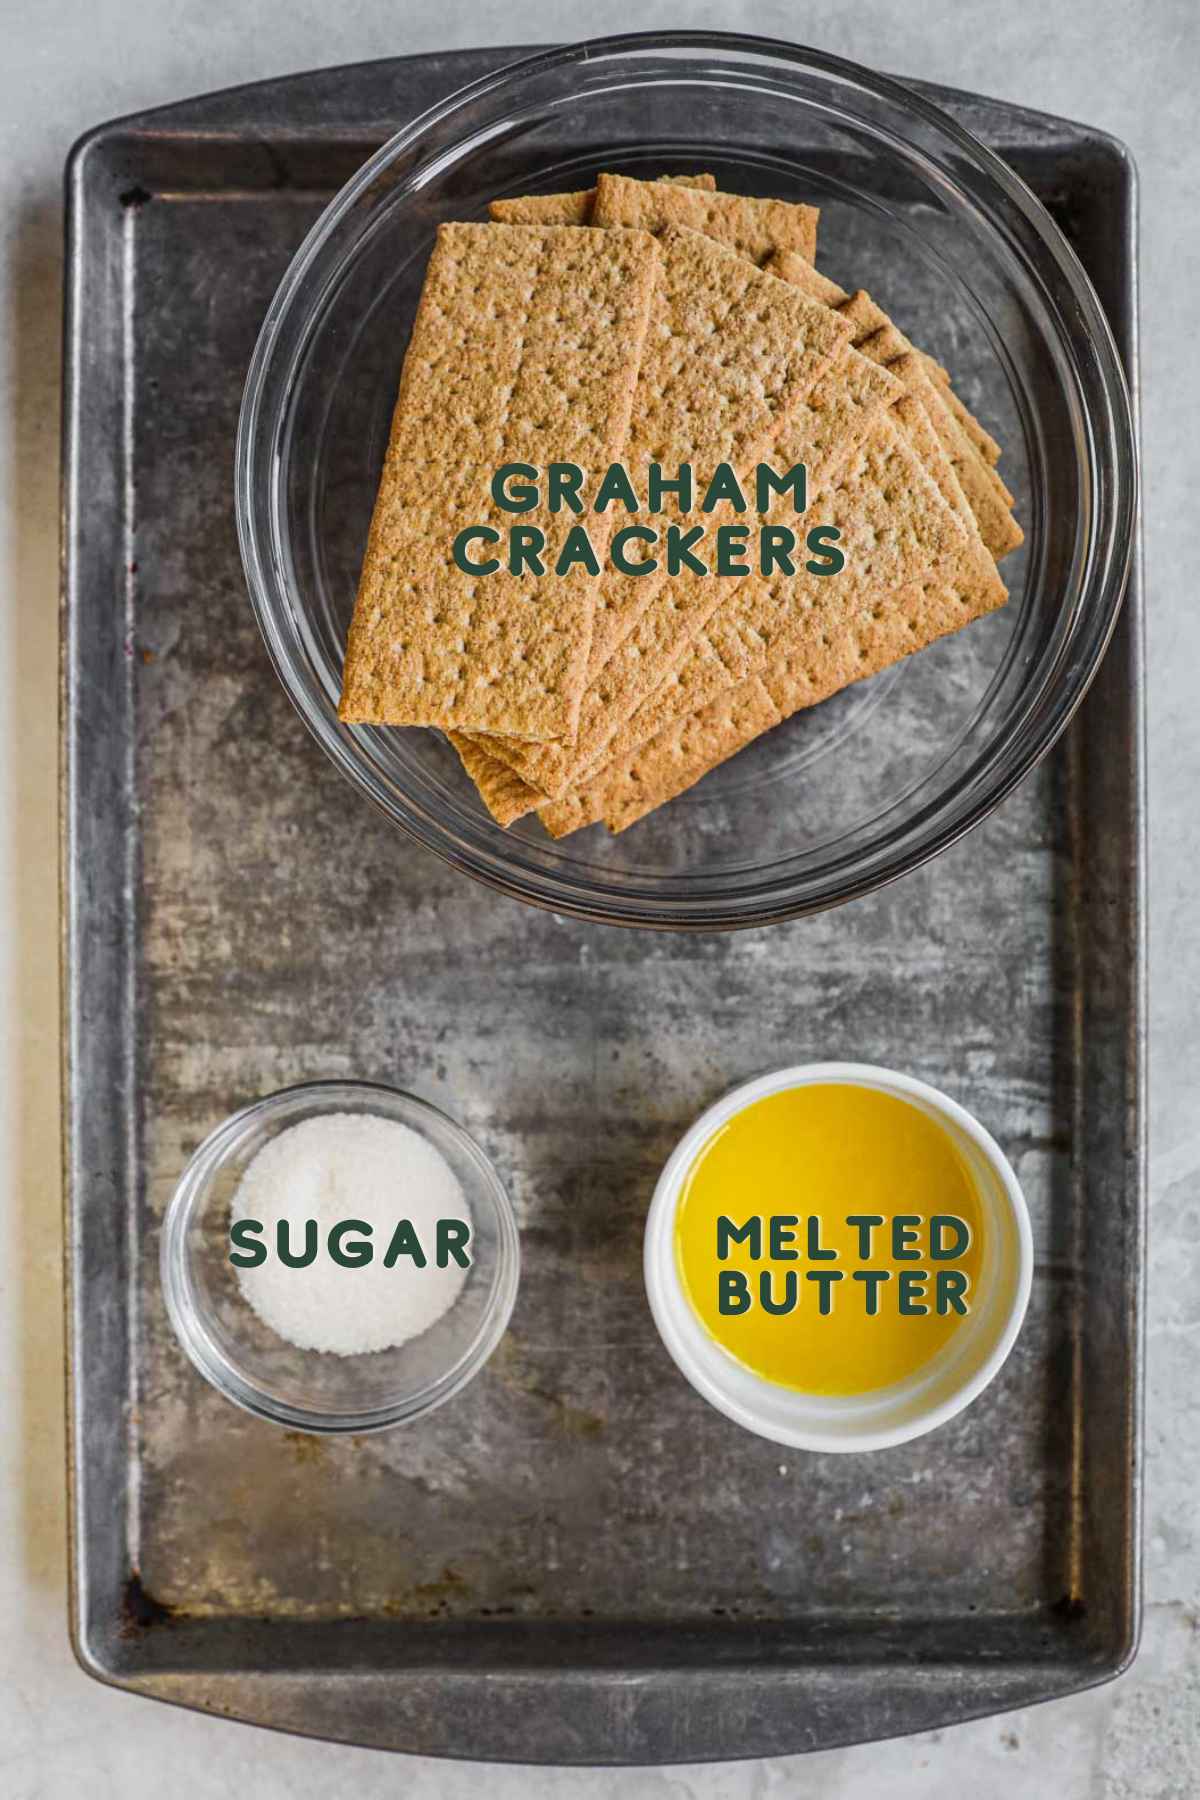 Ingredients to make easy graham cracker crust, graham crackers, sugar, melted butter, and salt.